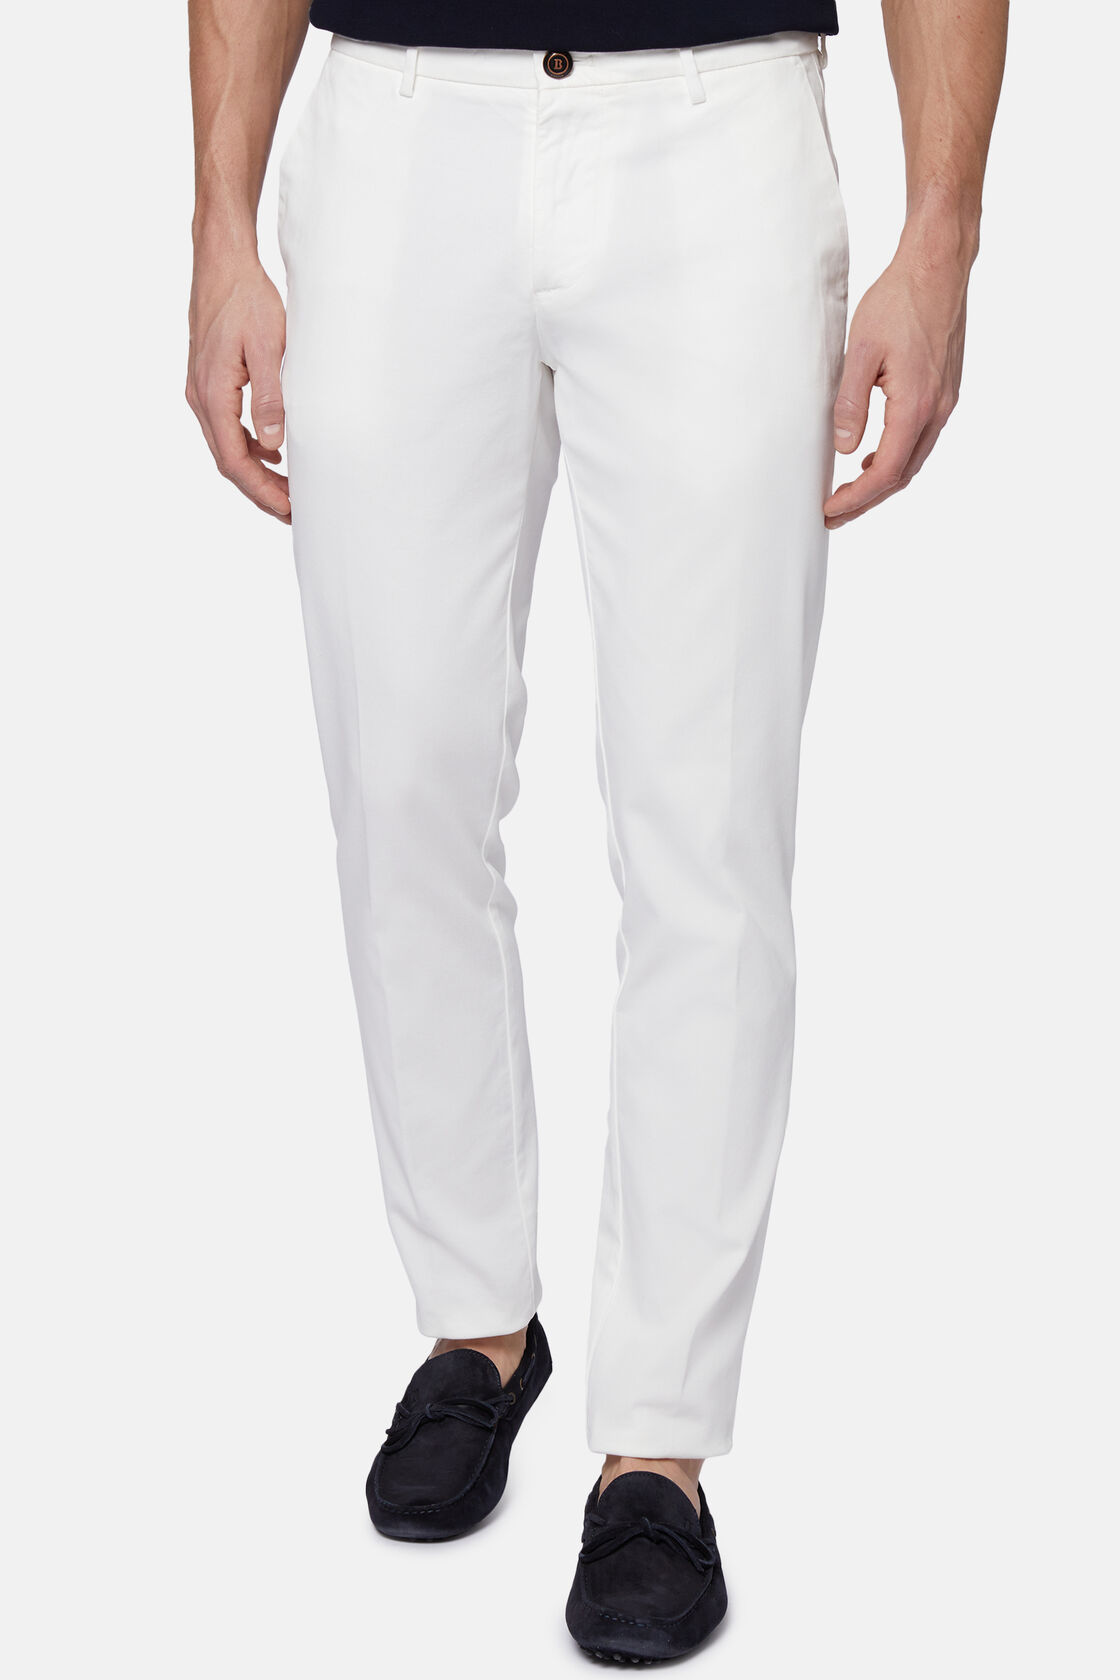 Pantalon En Coton Tencel Extensible, Blanc, hi-res